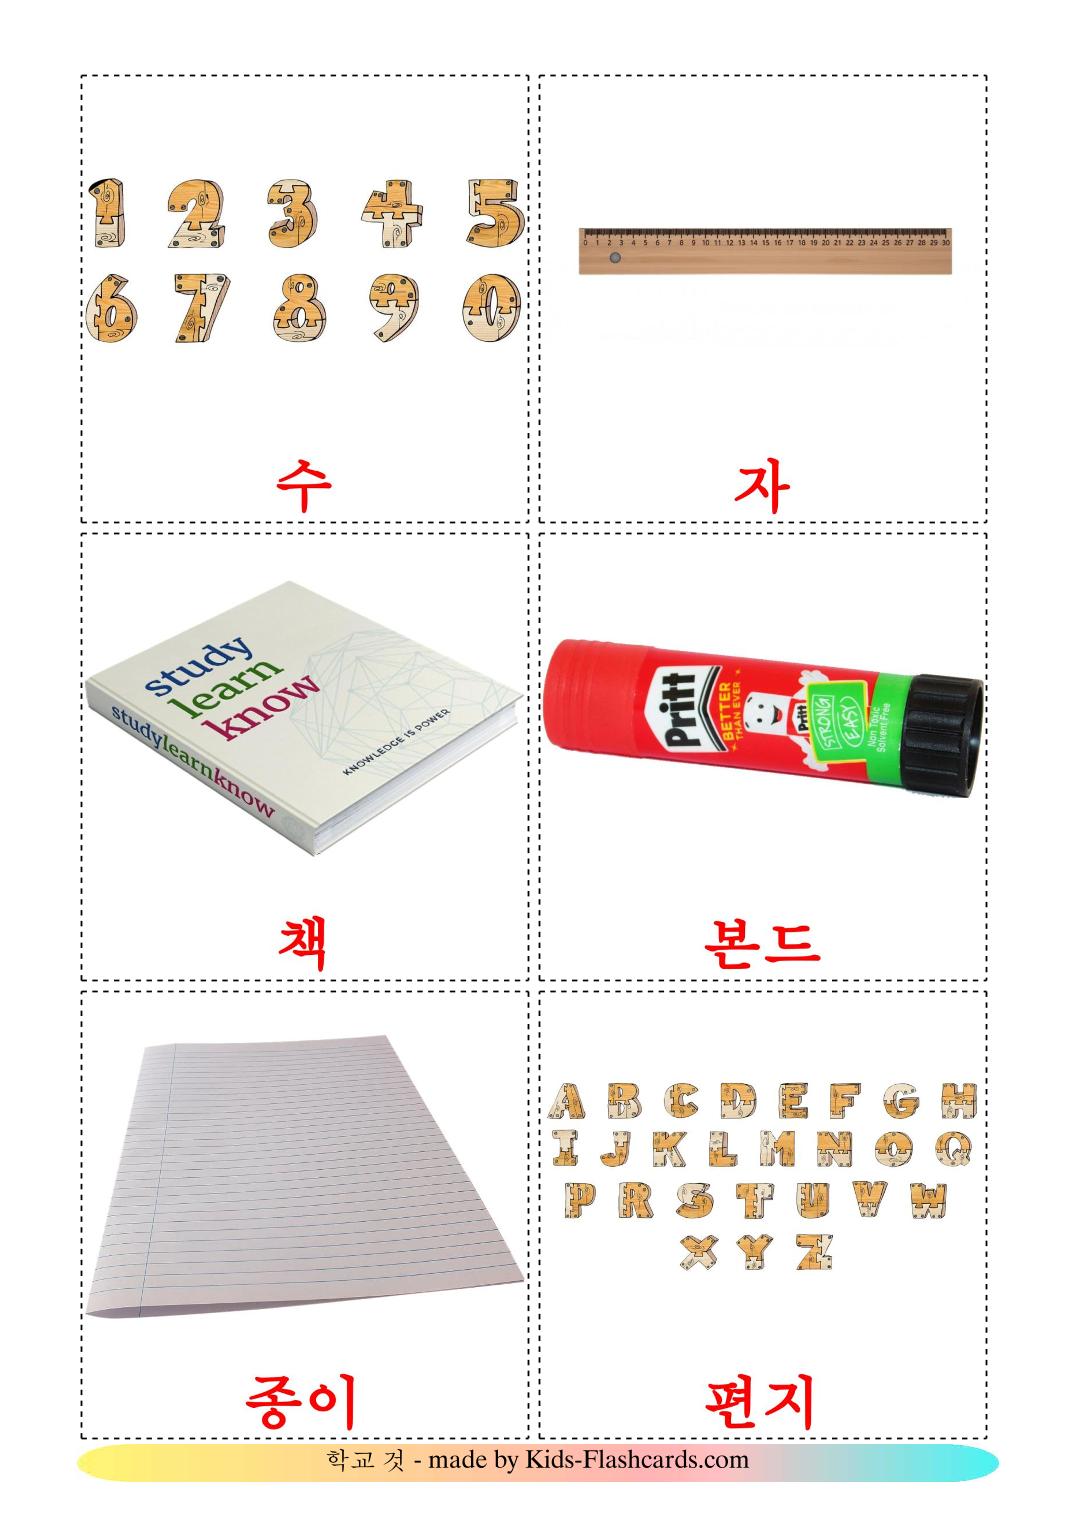 Classroom objects - 36 Free Printable korean Flashcards 